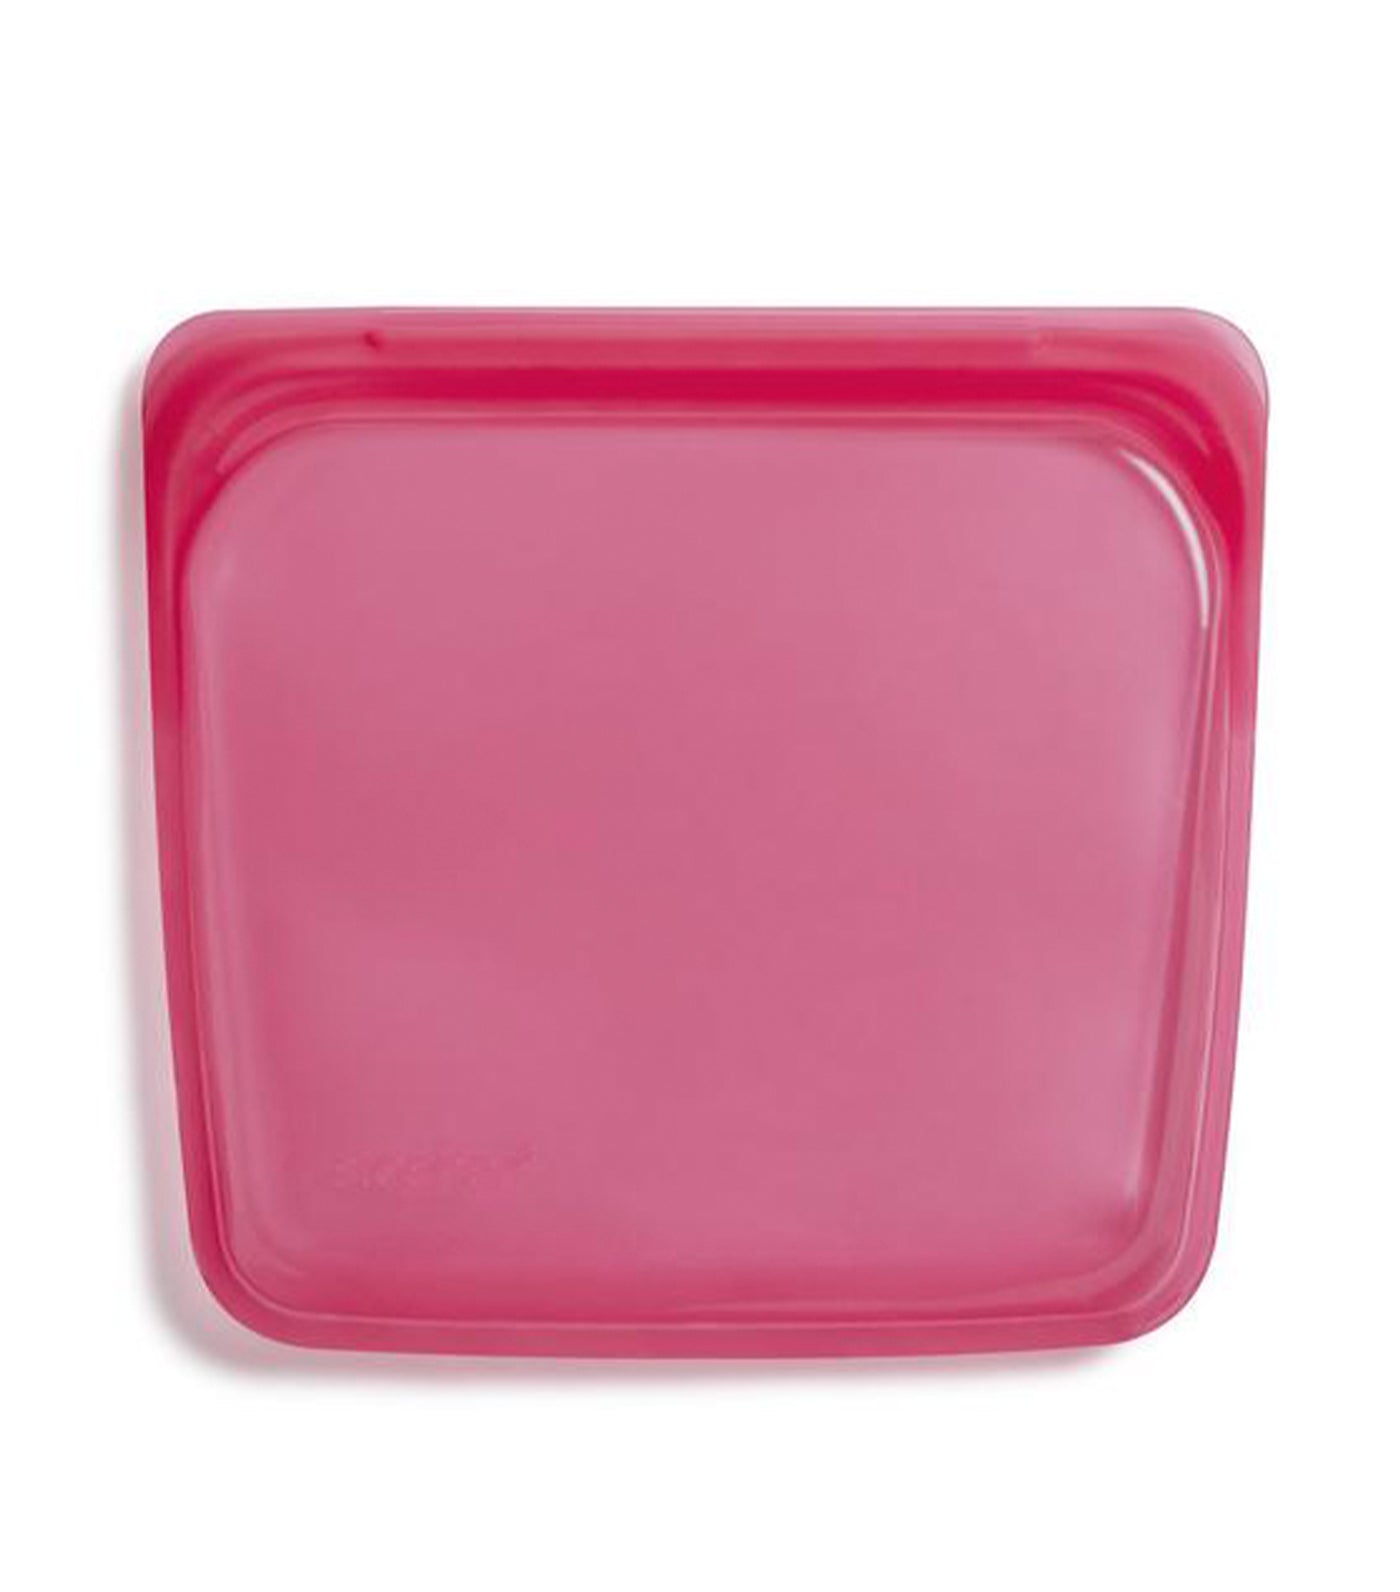 stasher reusable silicone sandwich bag - raspberry